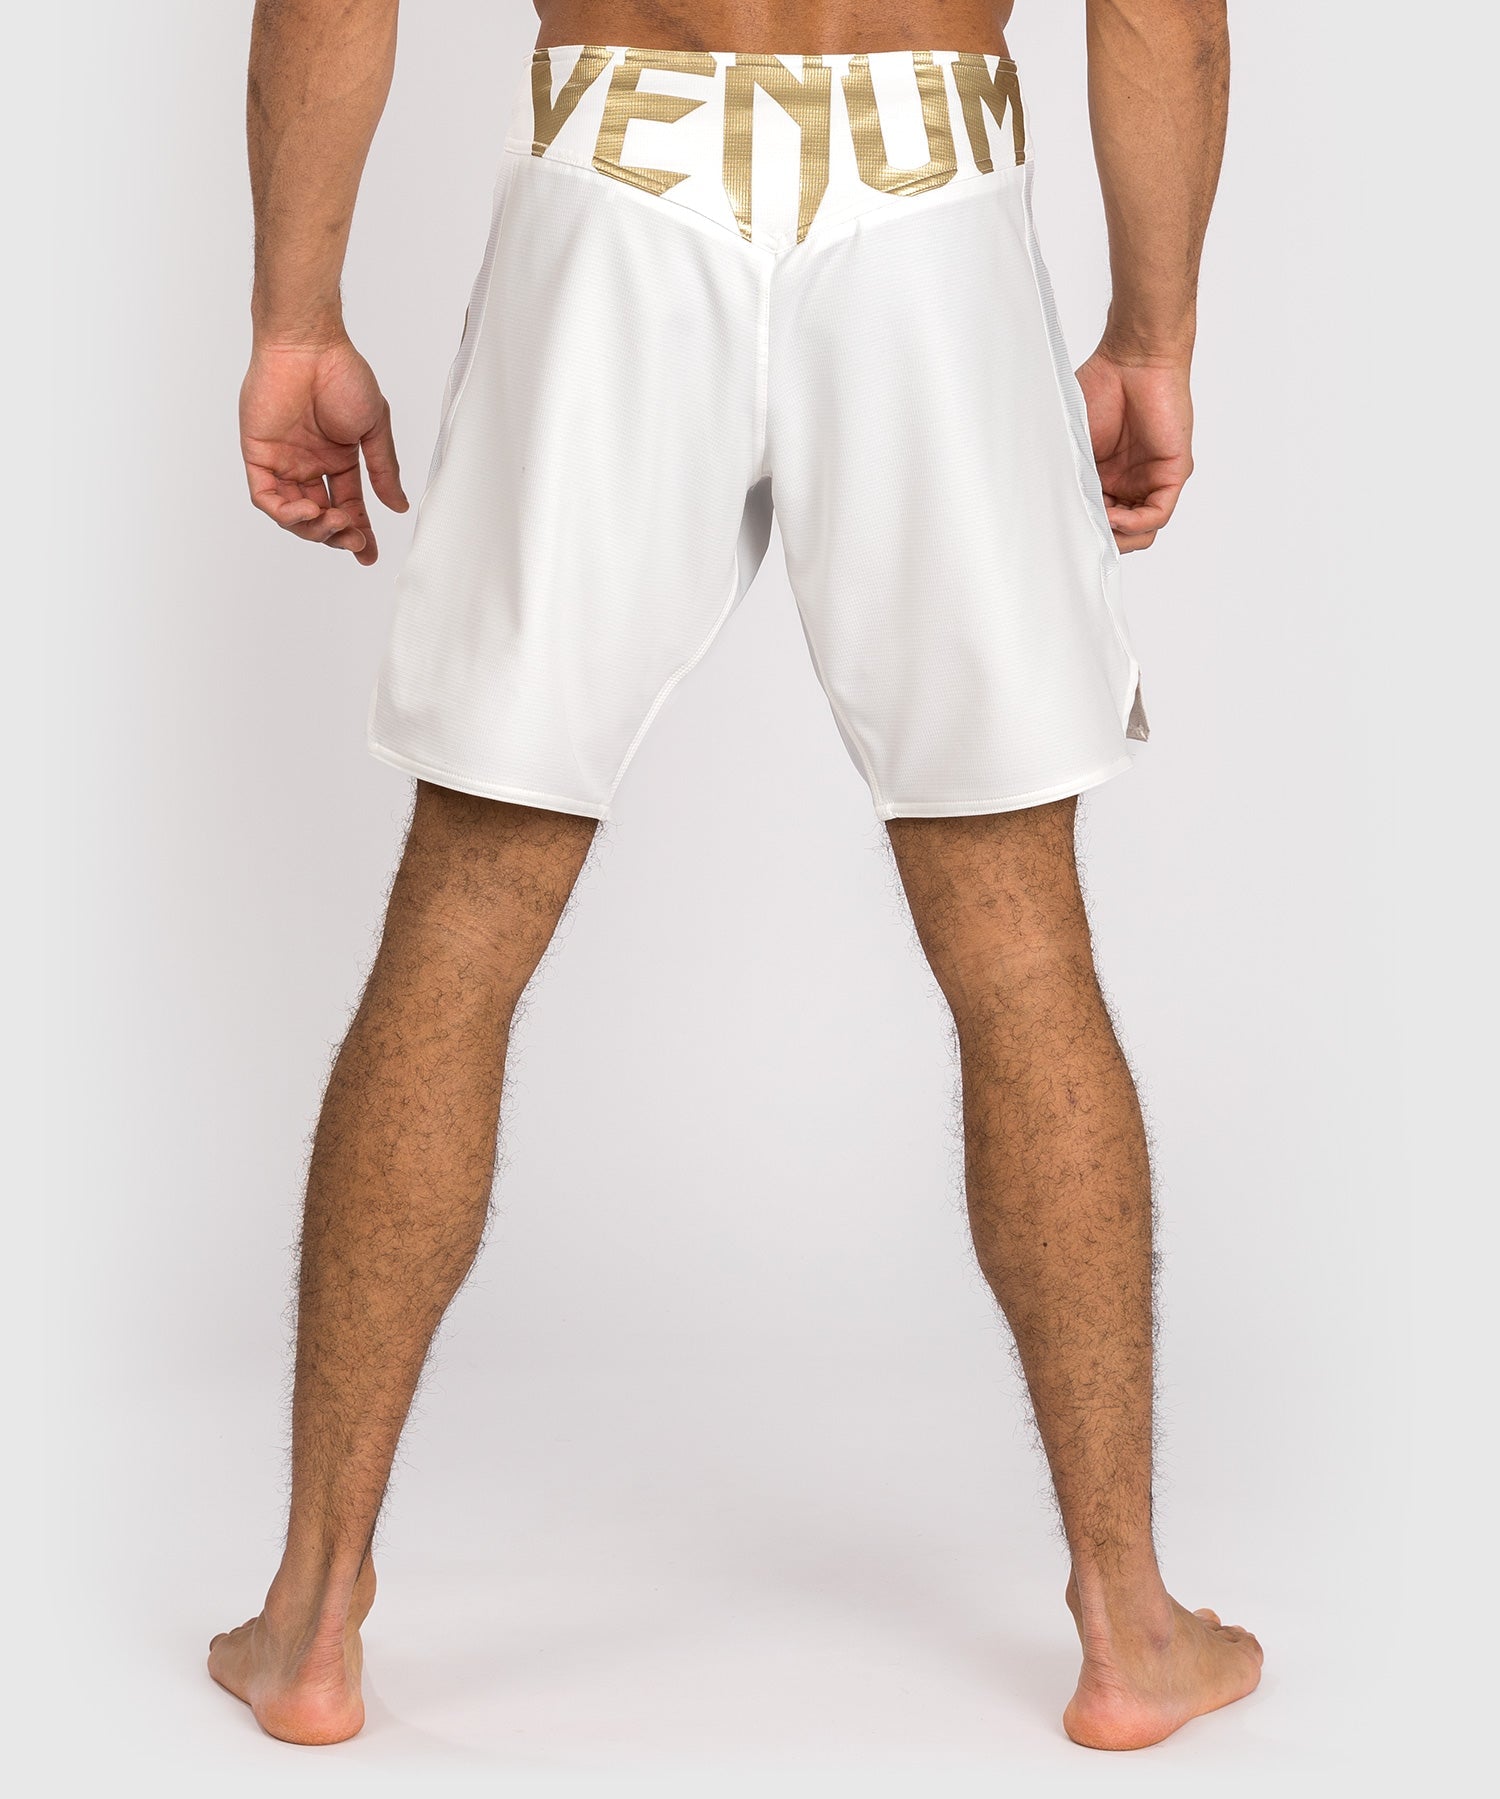 MMA shorts Venum Light 5.0